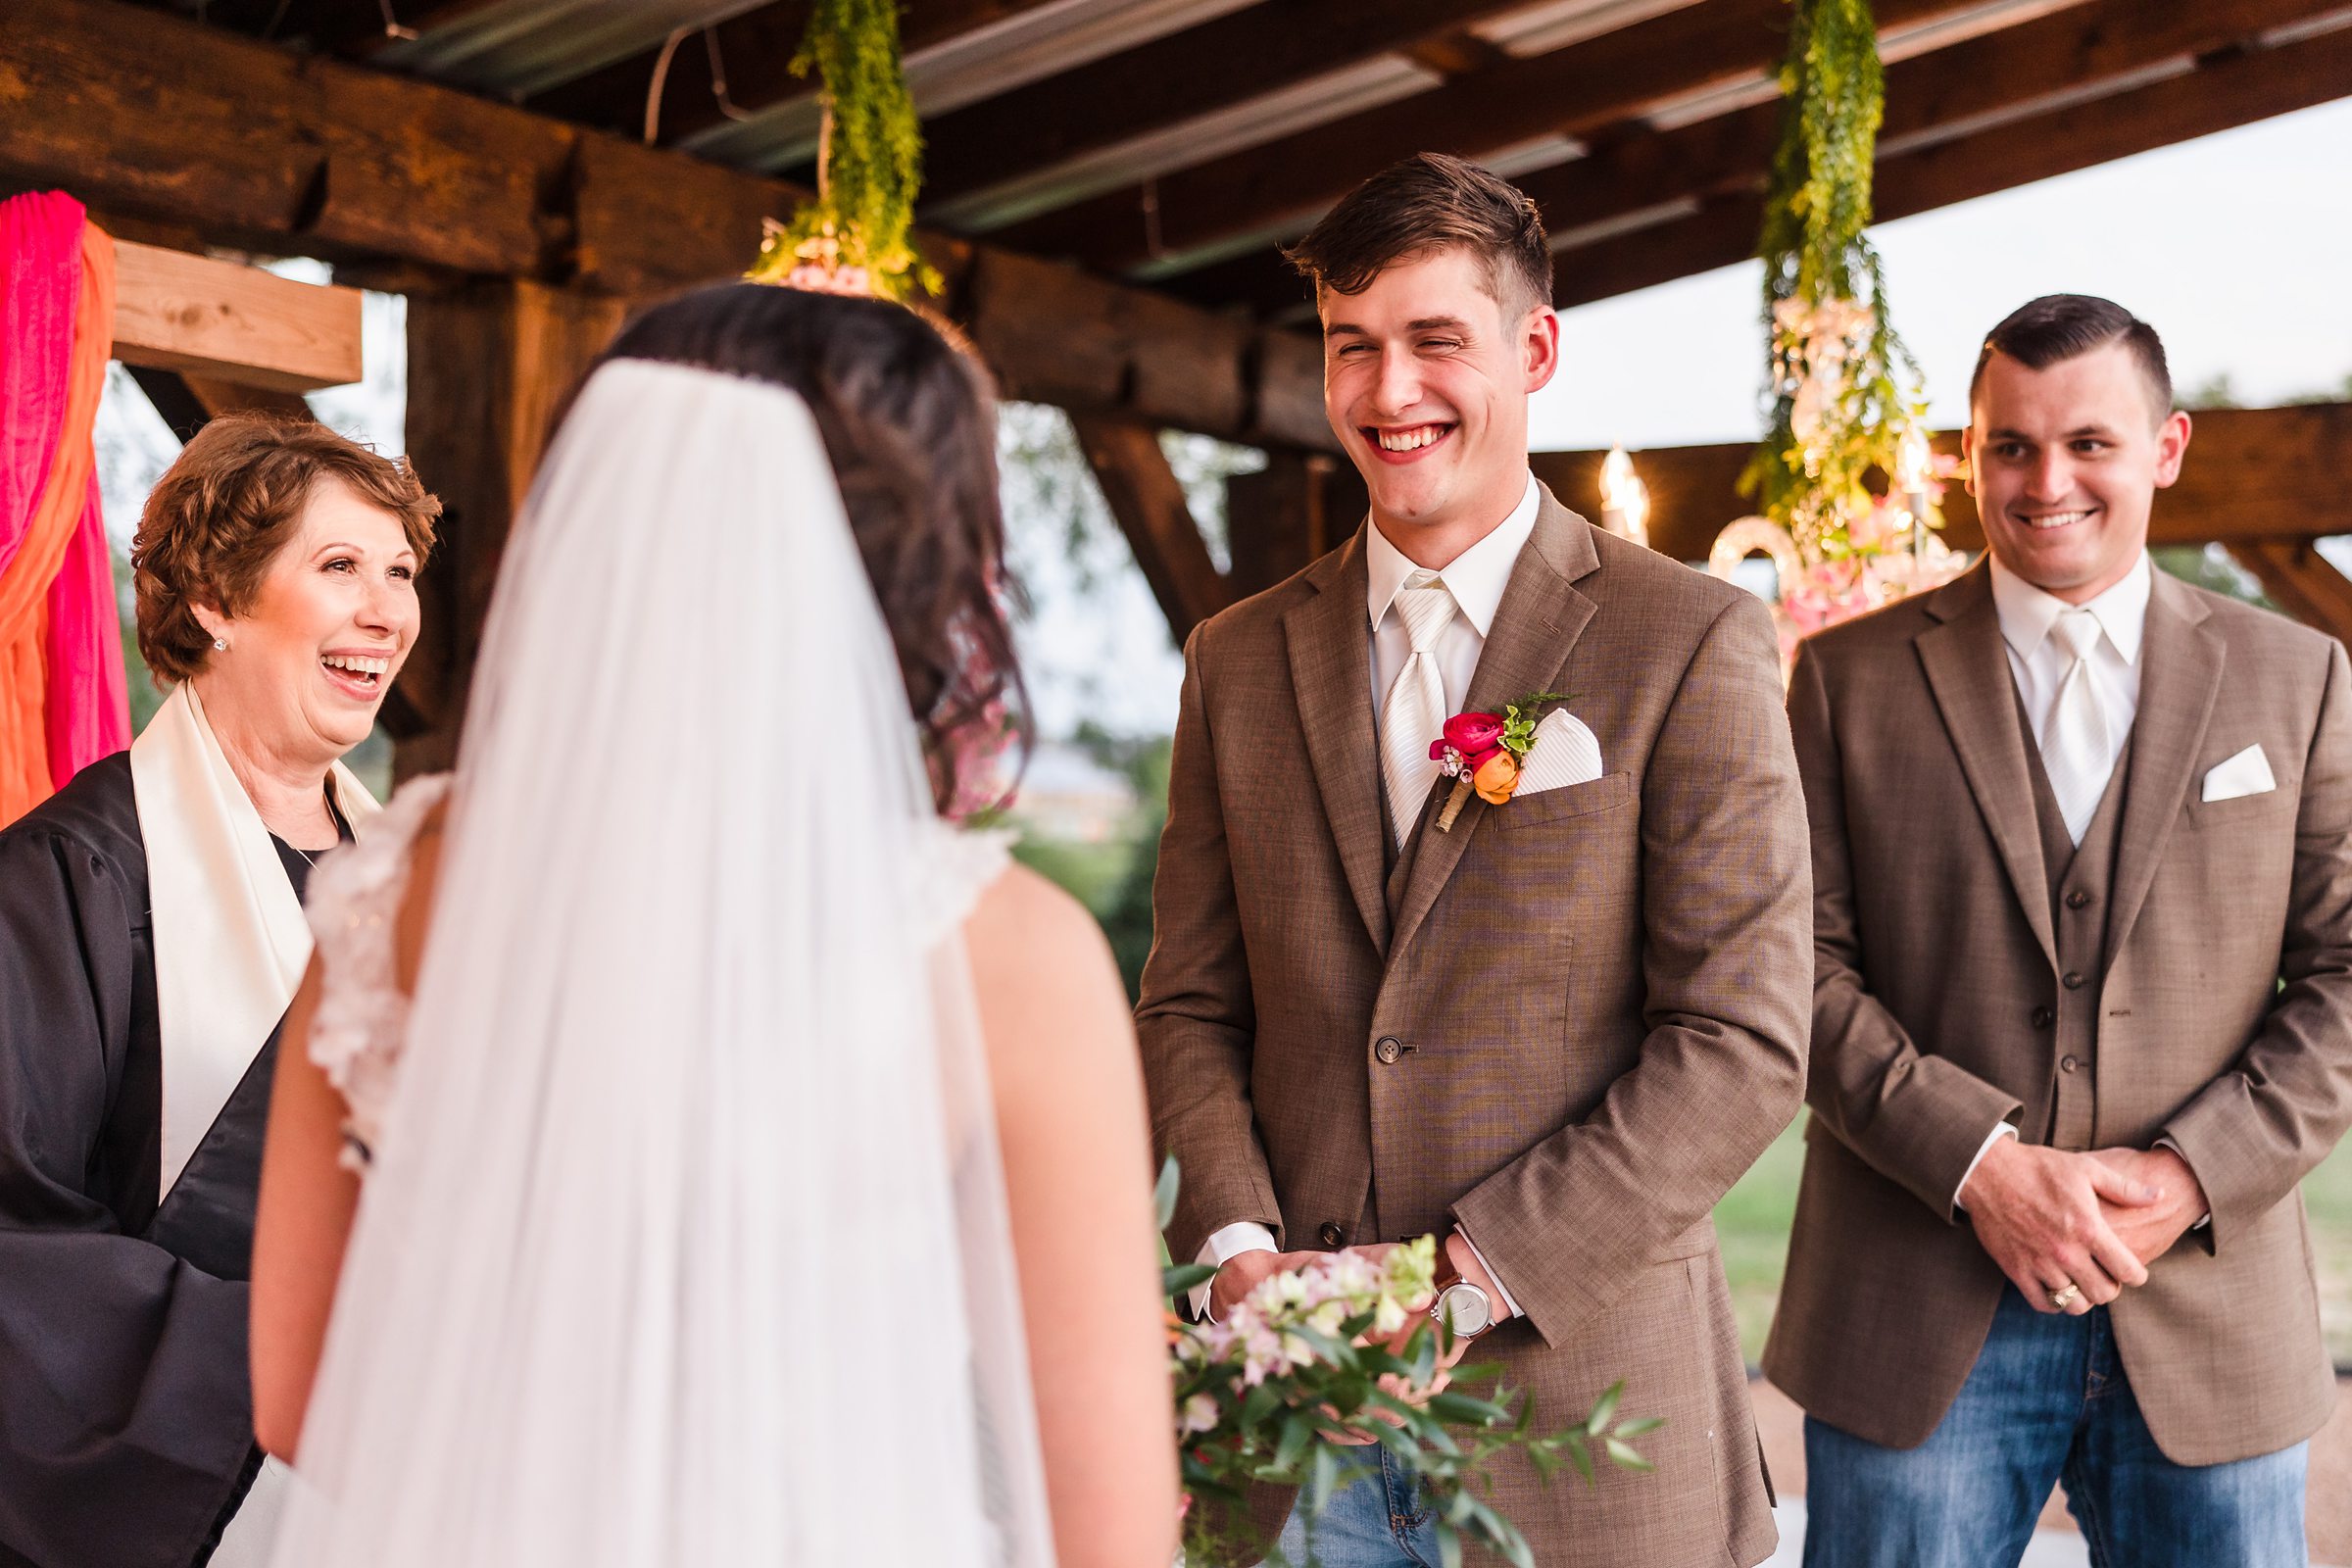 Bride and Groom during wedding ceremony at the Grandview wedding venue in La Vernia, Texas.